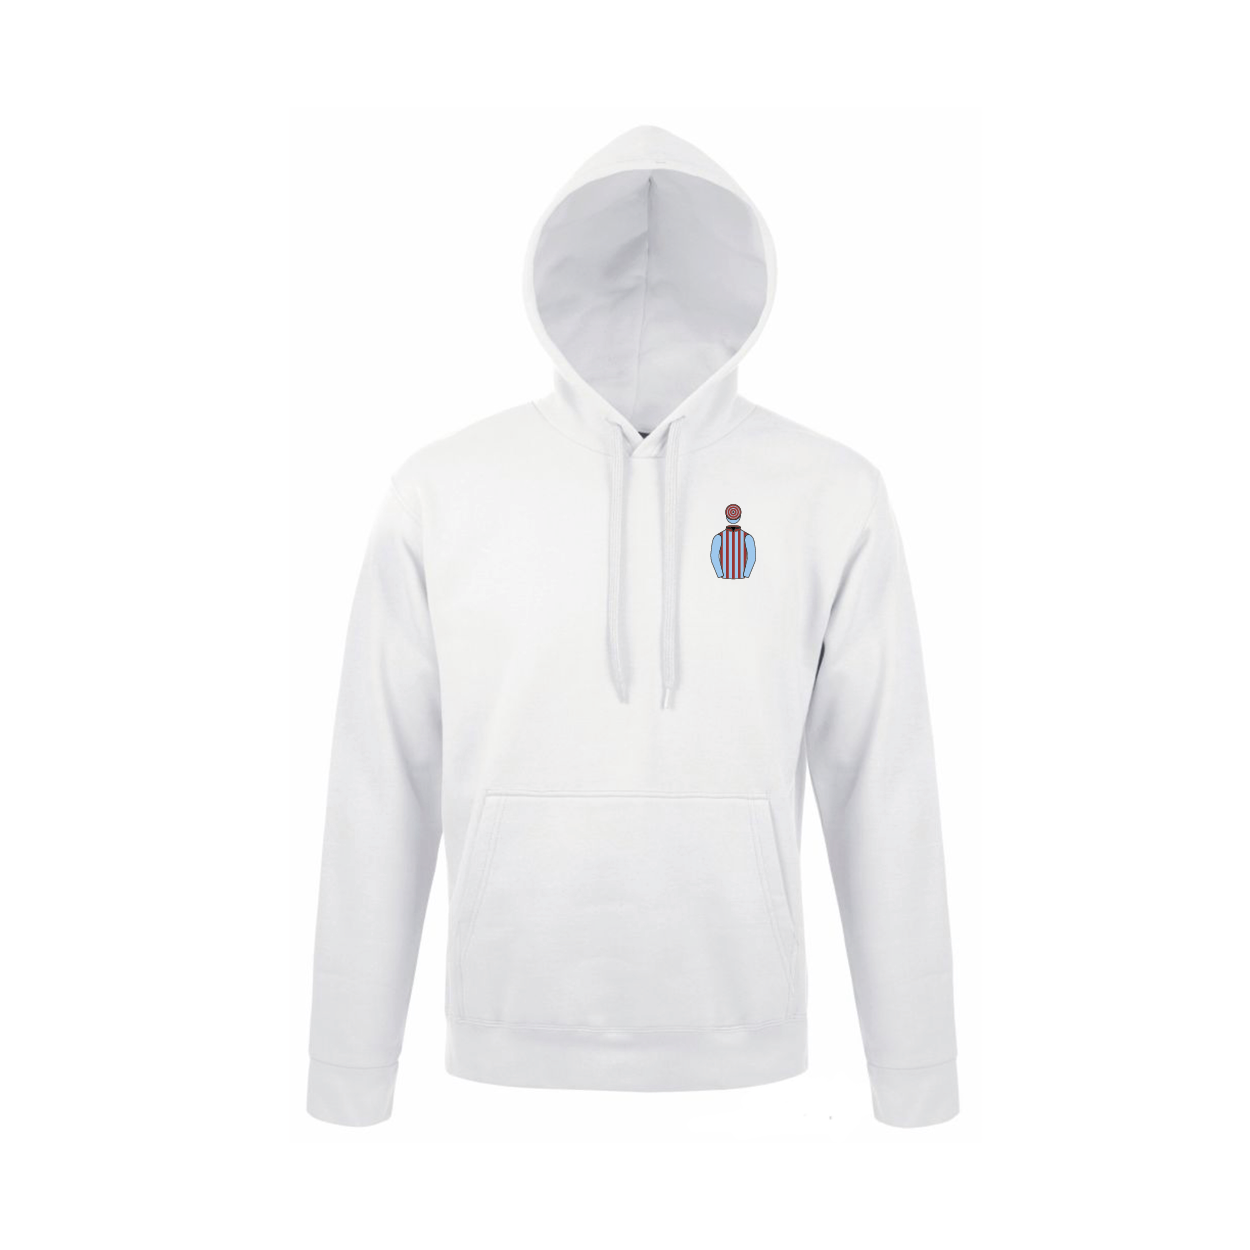 Unisex Jim Lewis Embroidered Hooded Sweatshirt - Clothing - Hacked Up